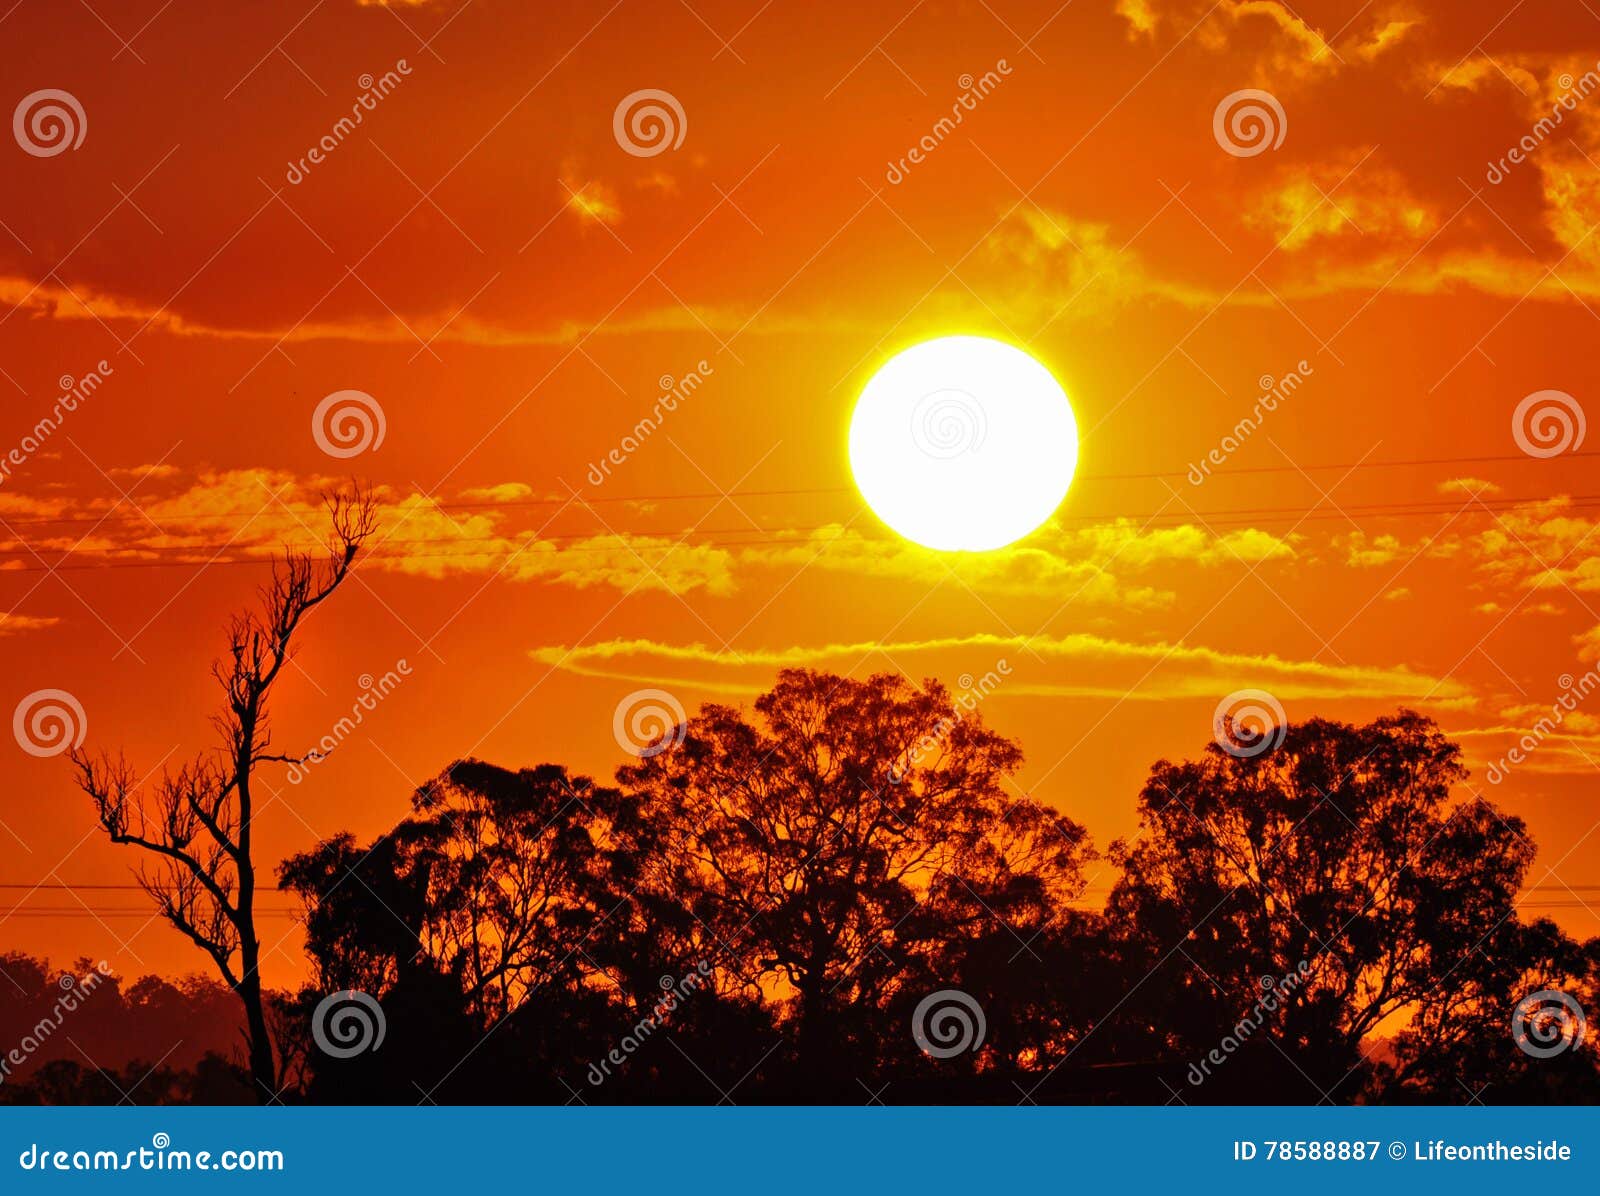 hot burning sun australian outback summer